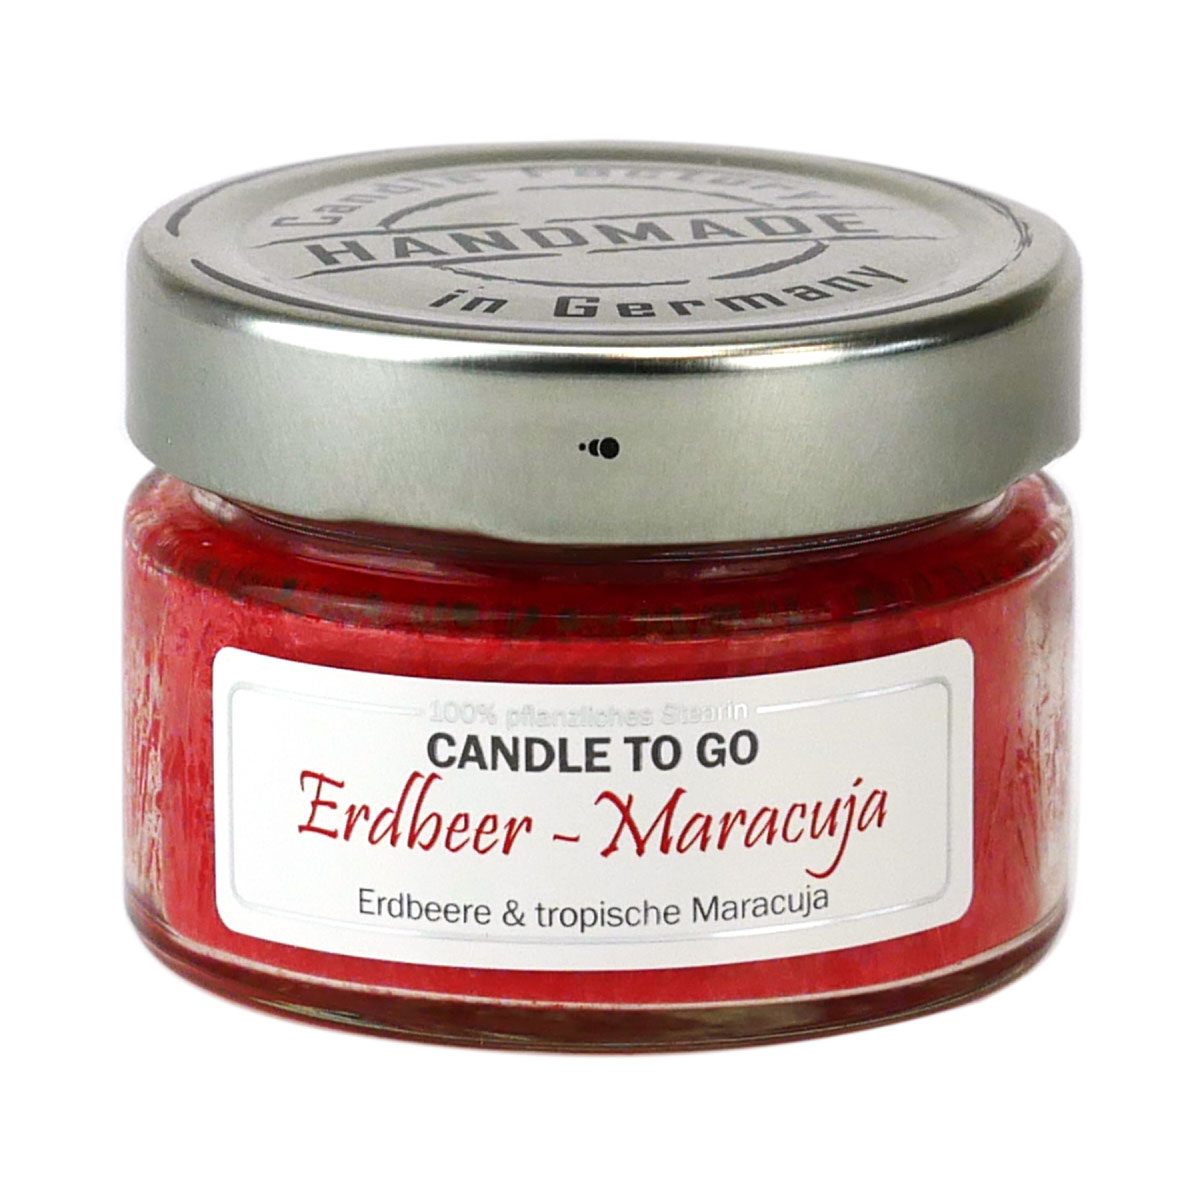 Erdbeer Maracuja - Candle to Go Duftkerze von Candle Factory